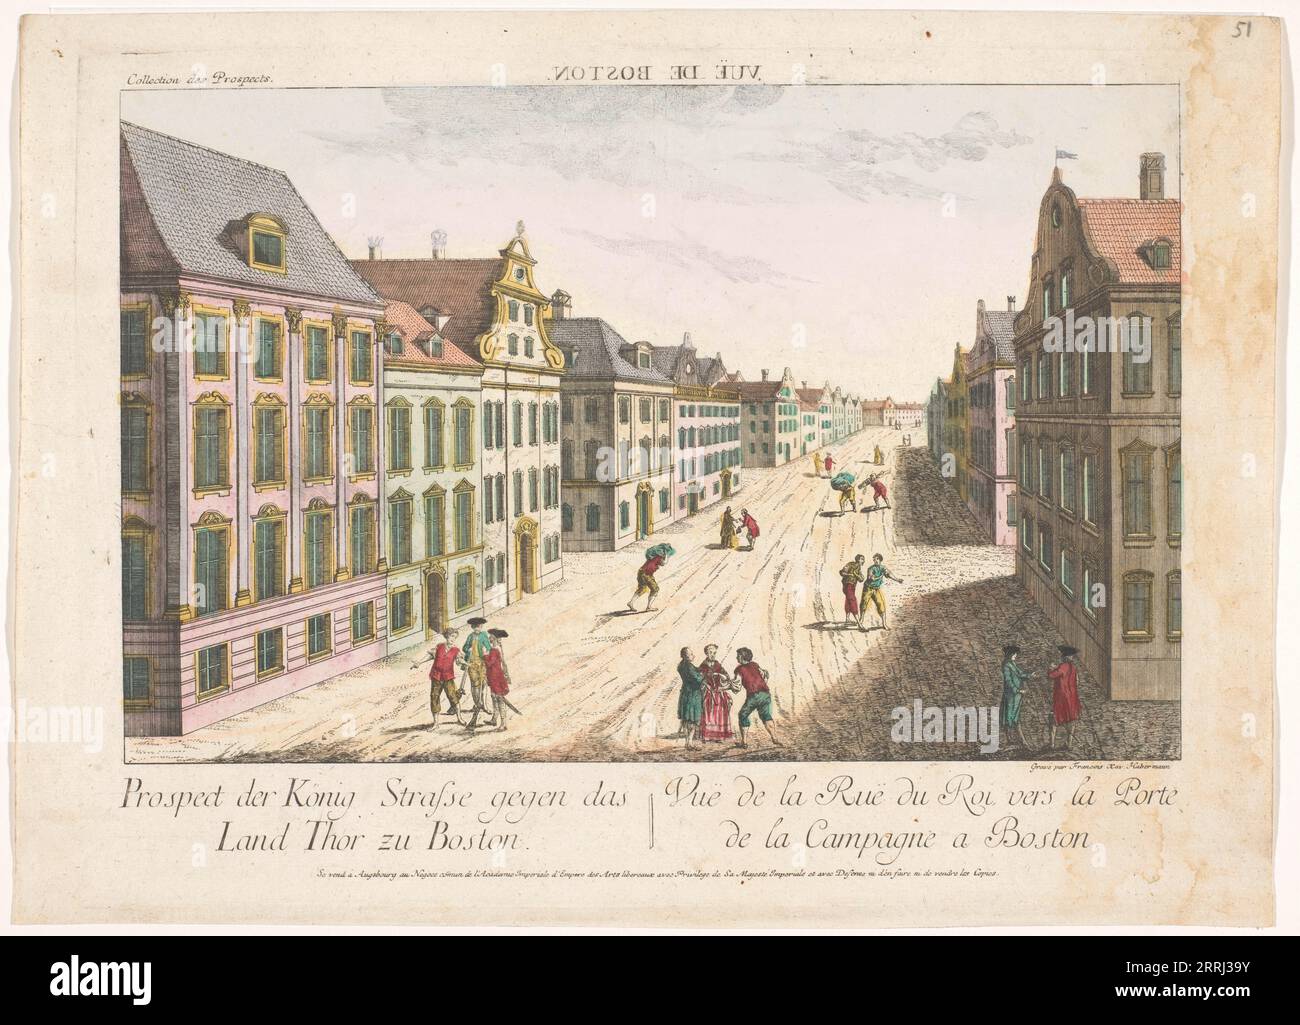 View of King Street in Boston, 1755-1779. Stock Photo